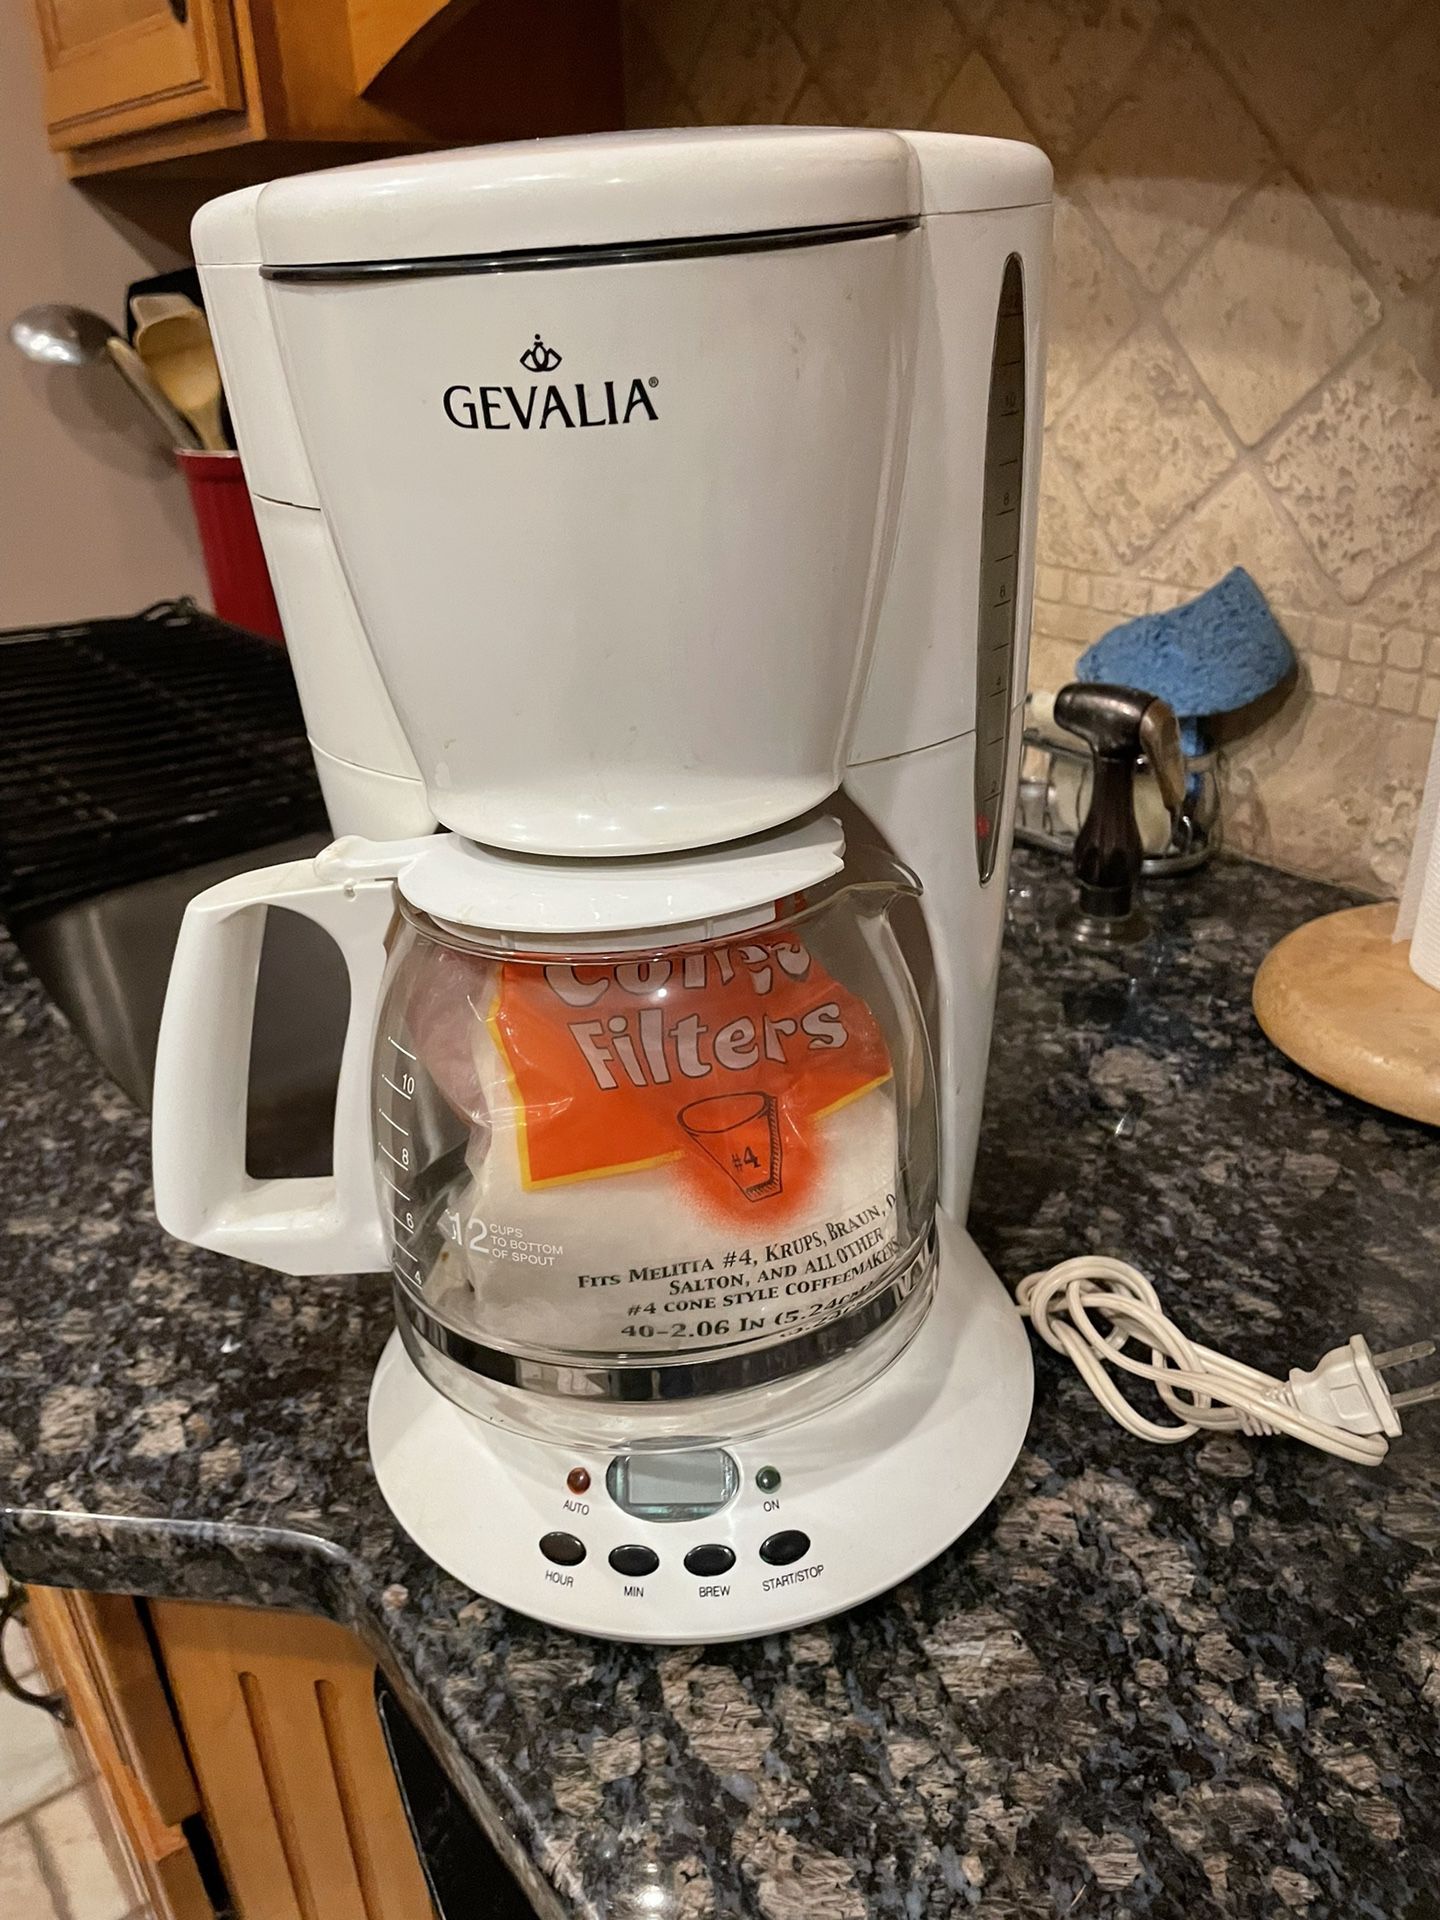 Gevalia Coffee Maker: Worth It Or Not?